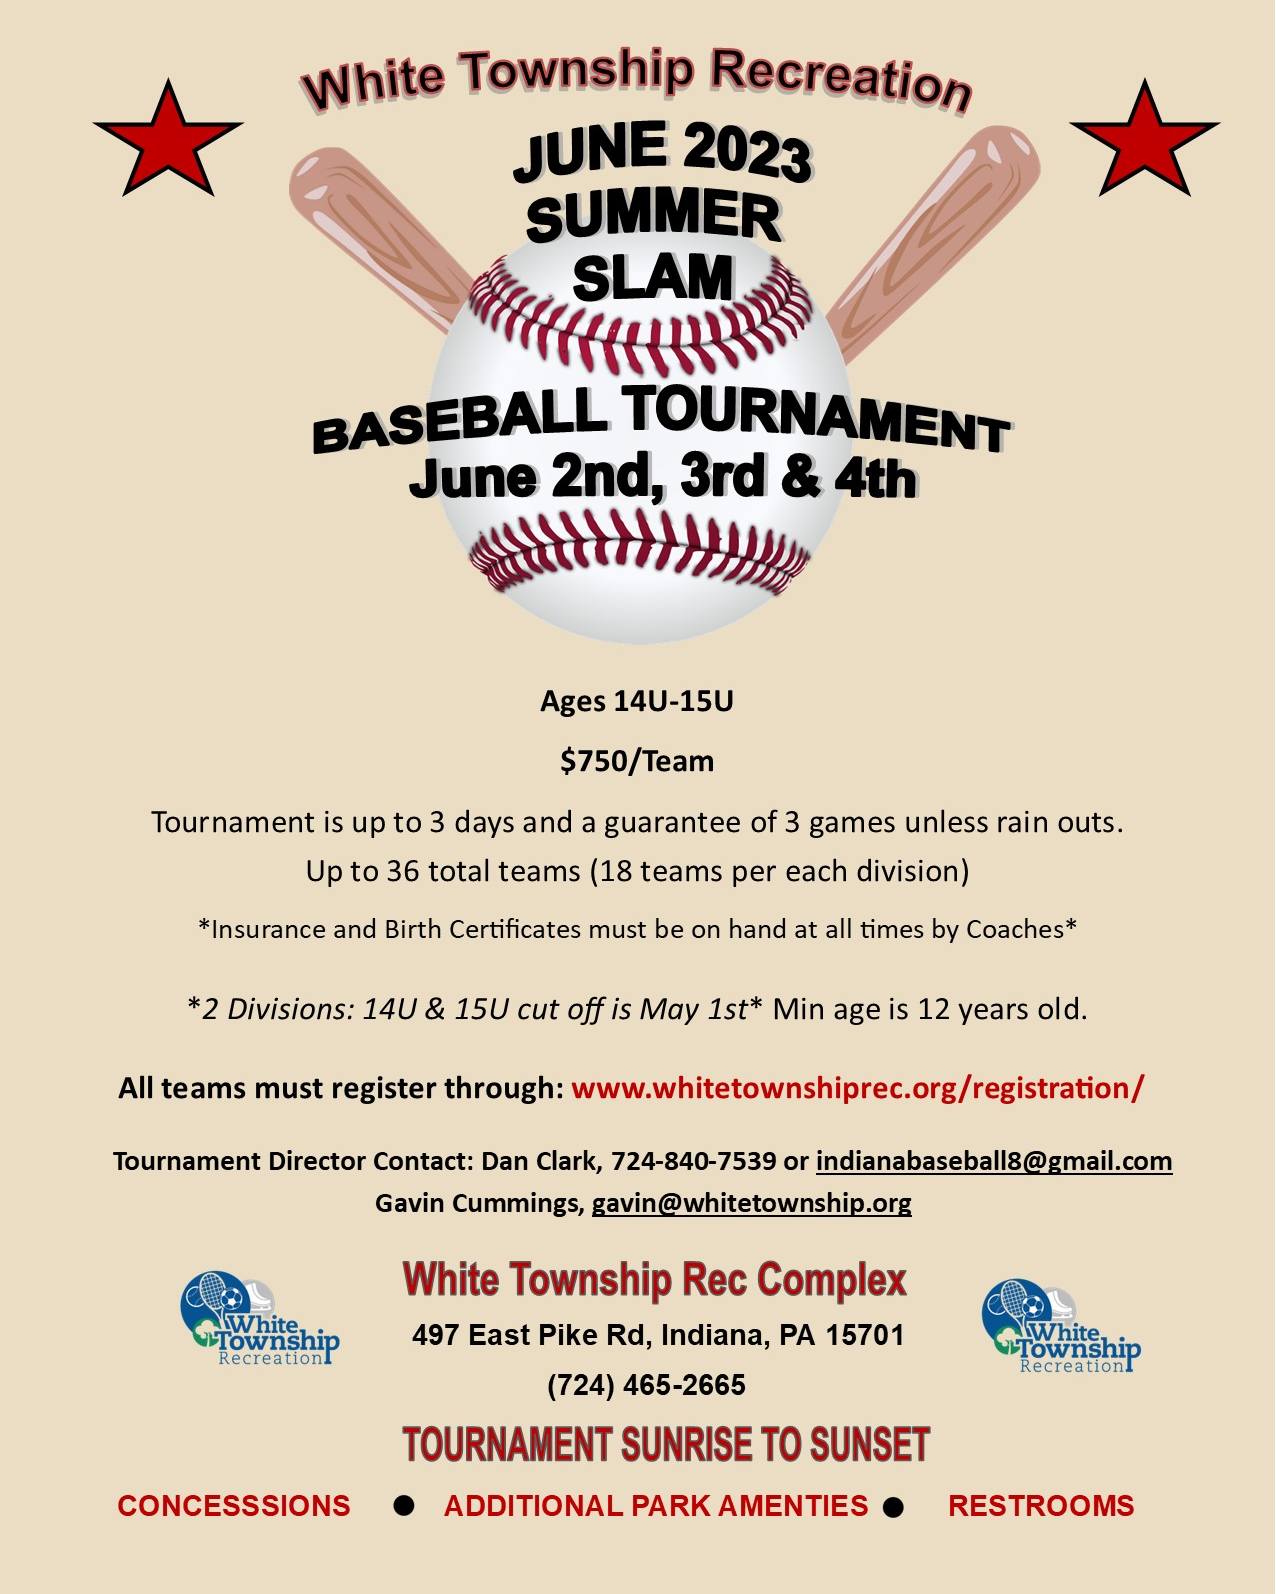 June 2023 Summer Slam Baseball Tournament Visit Indiana County